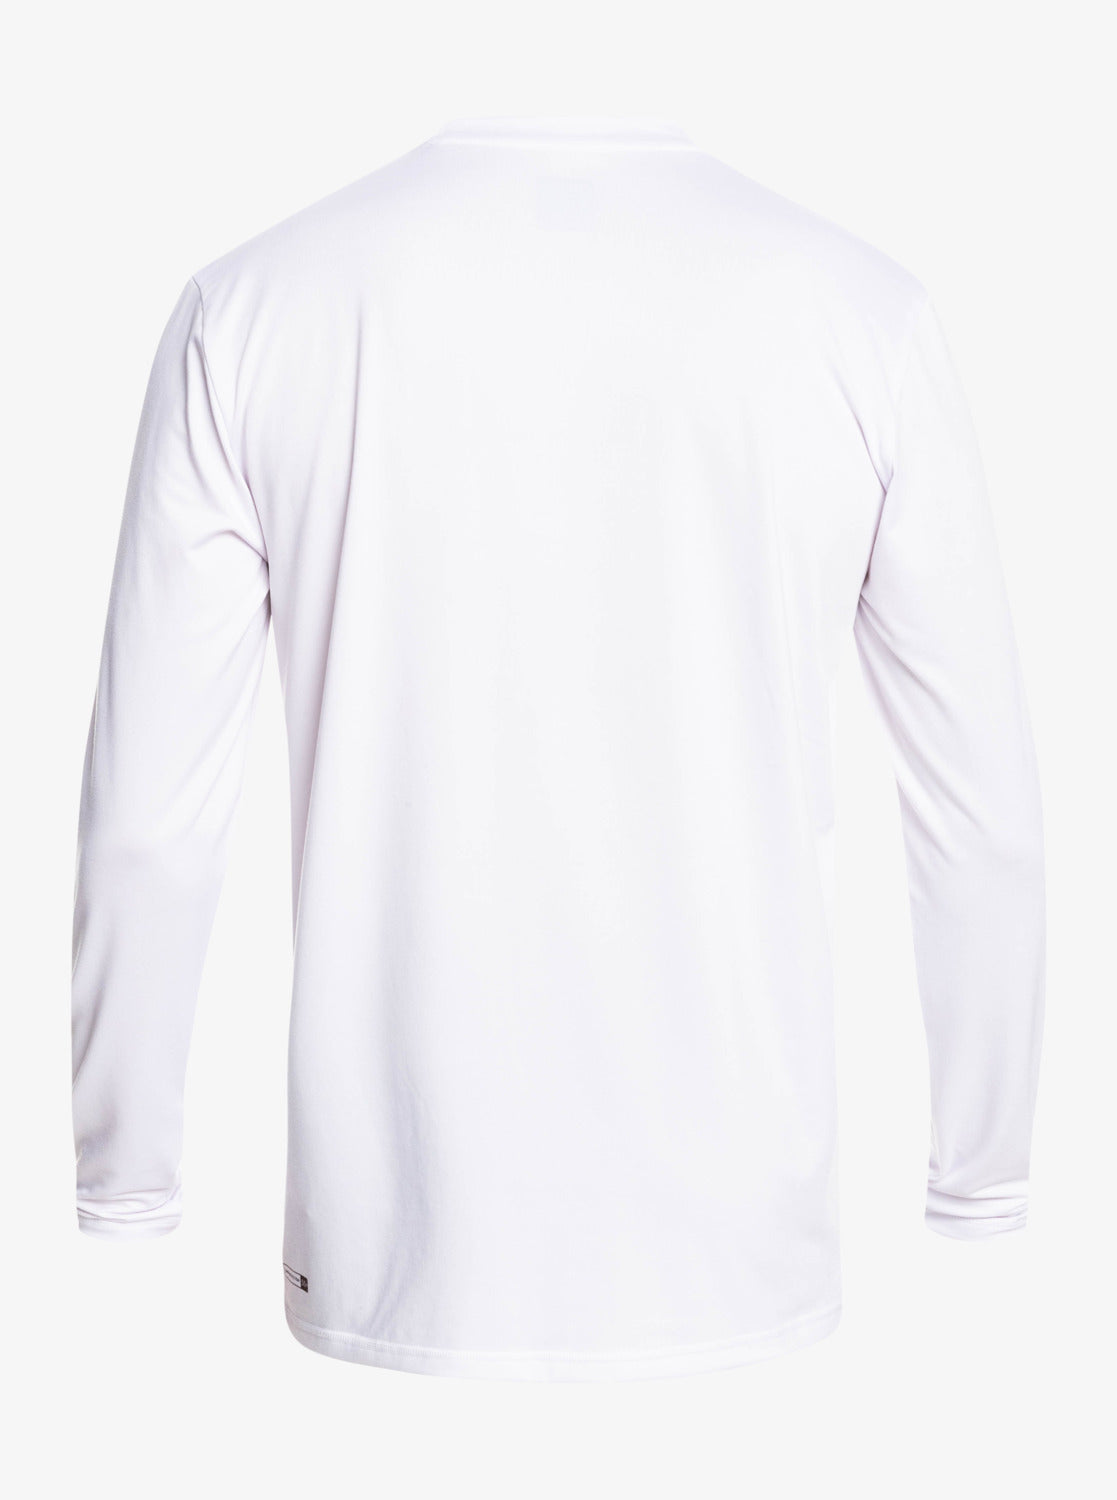 Women's UPF 50+ Long Sleeve Shirts FS03W, Seafoam/White Logo / X-Large